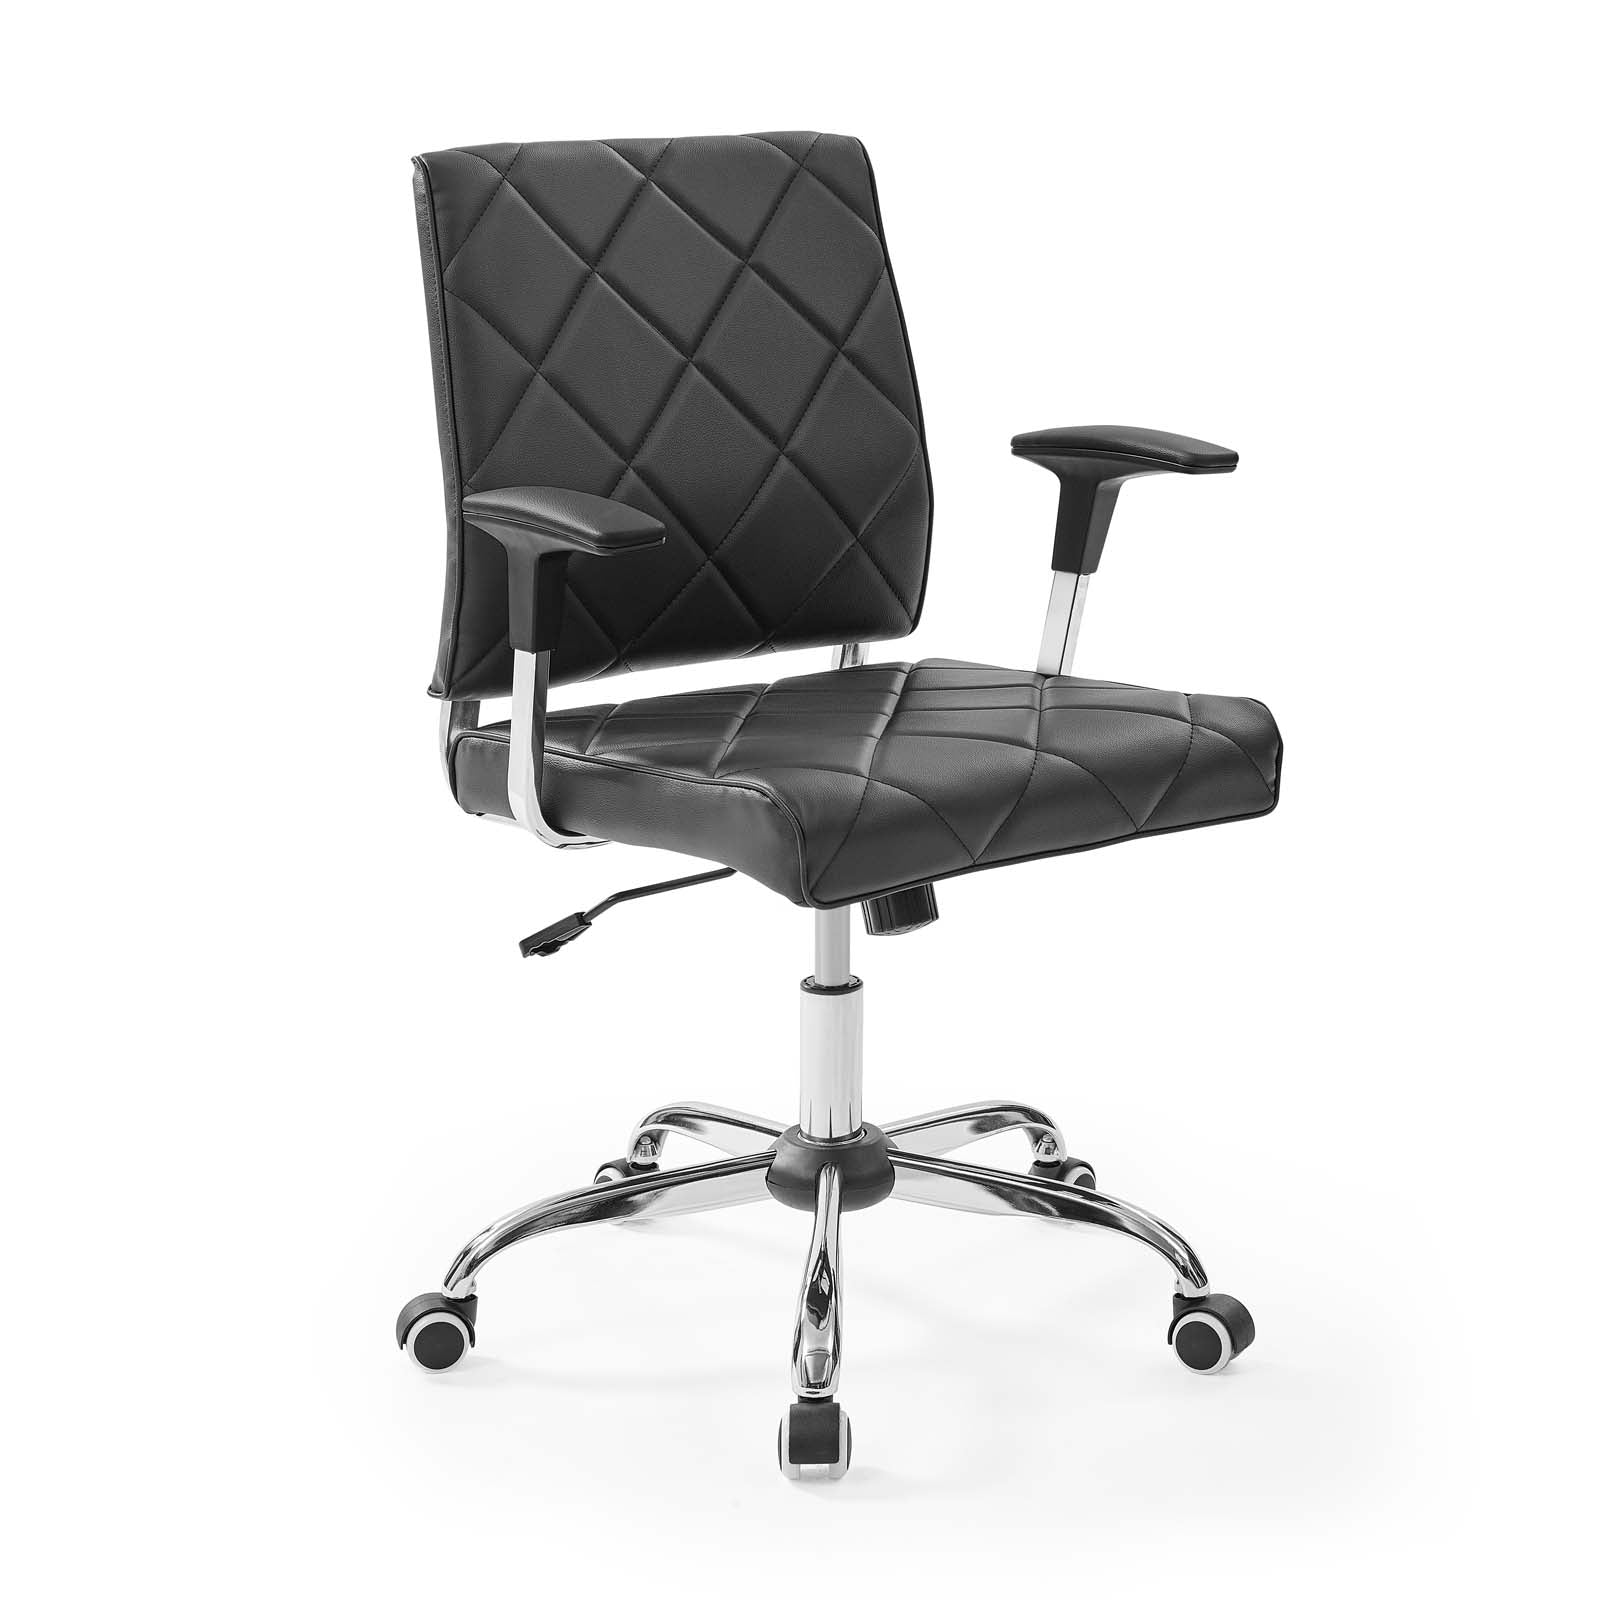  Lattice Vinyl Office Chair For Super Productive Offices